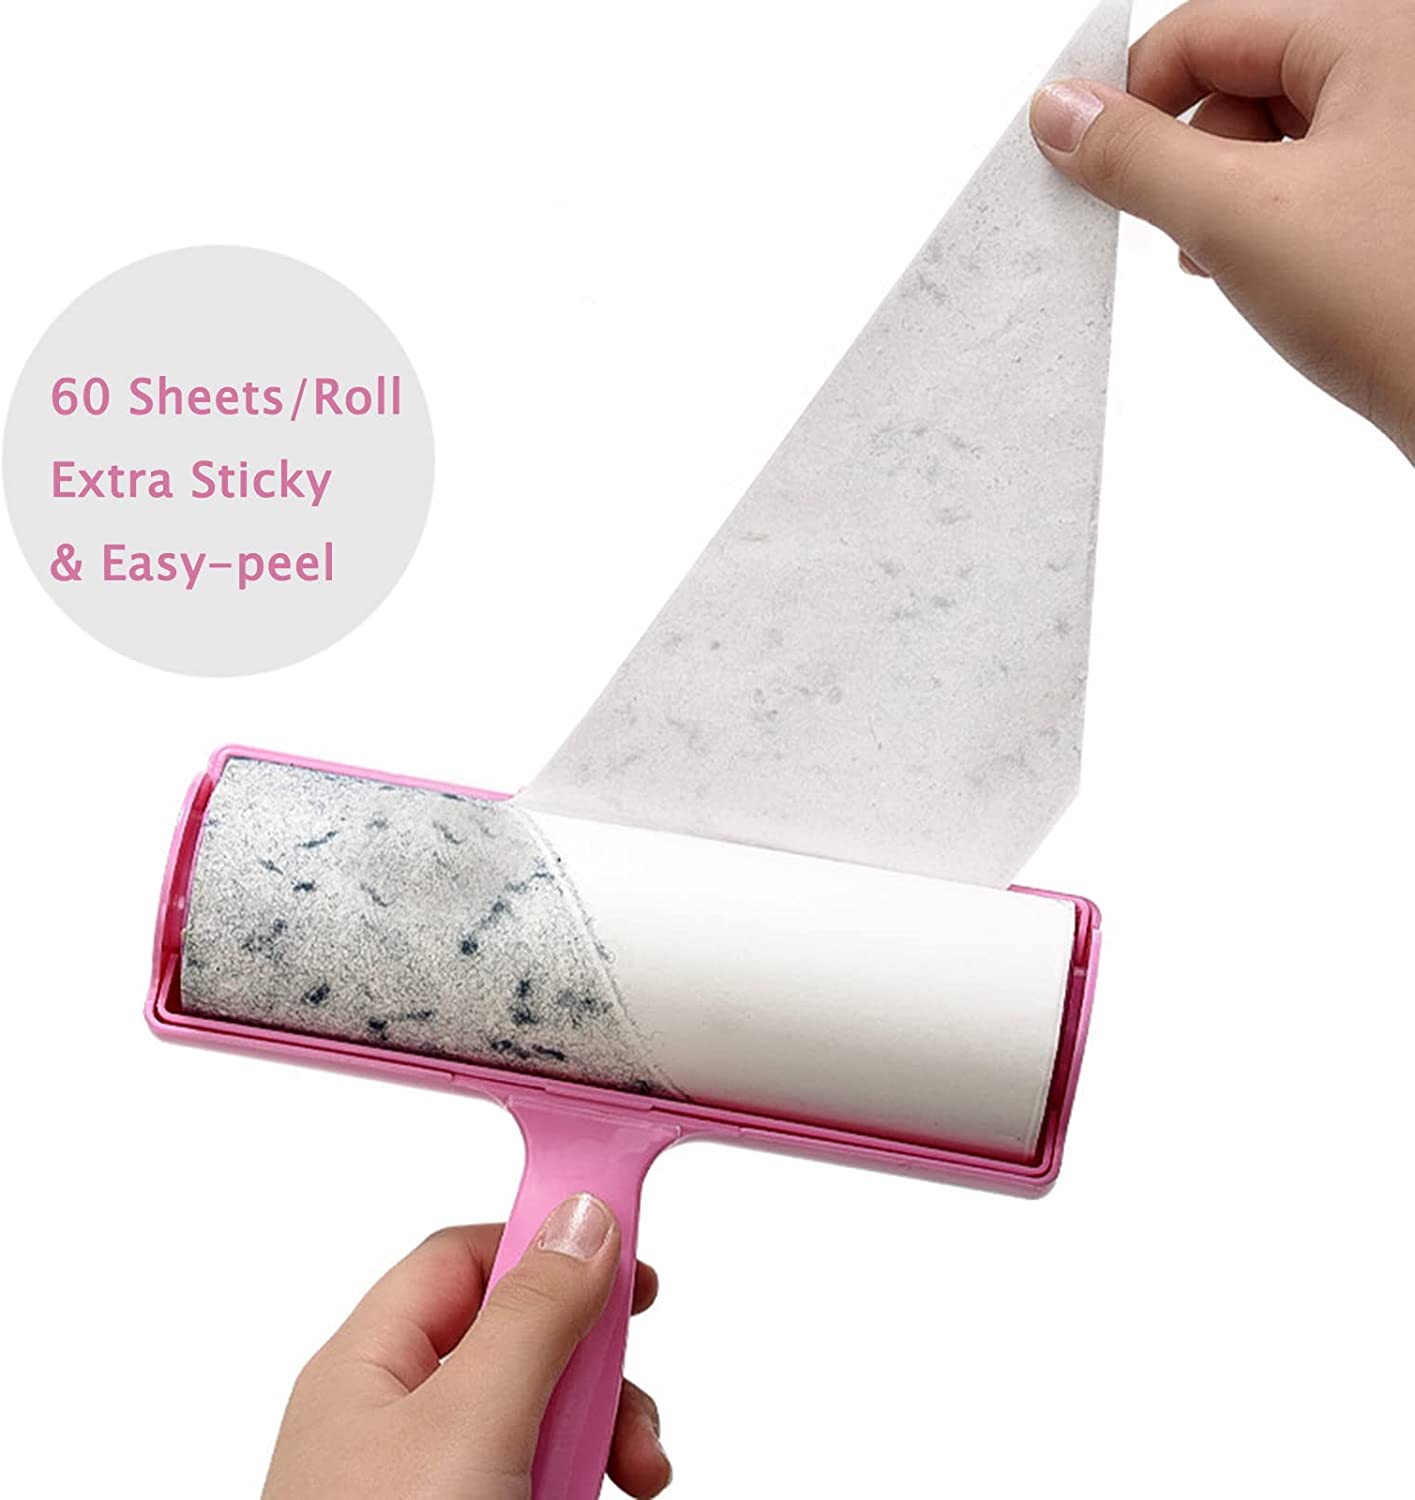 60 Sheets Sticky Mop Refill Roller